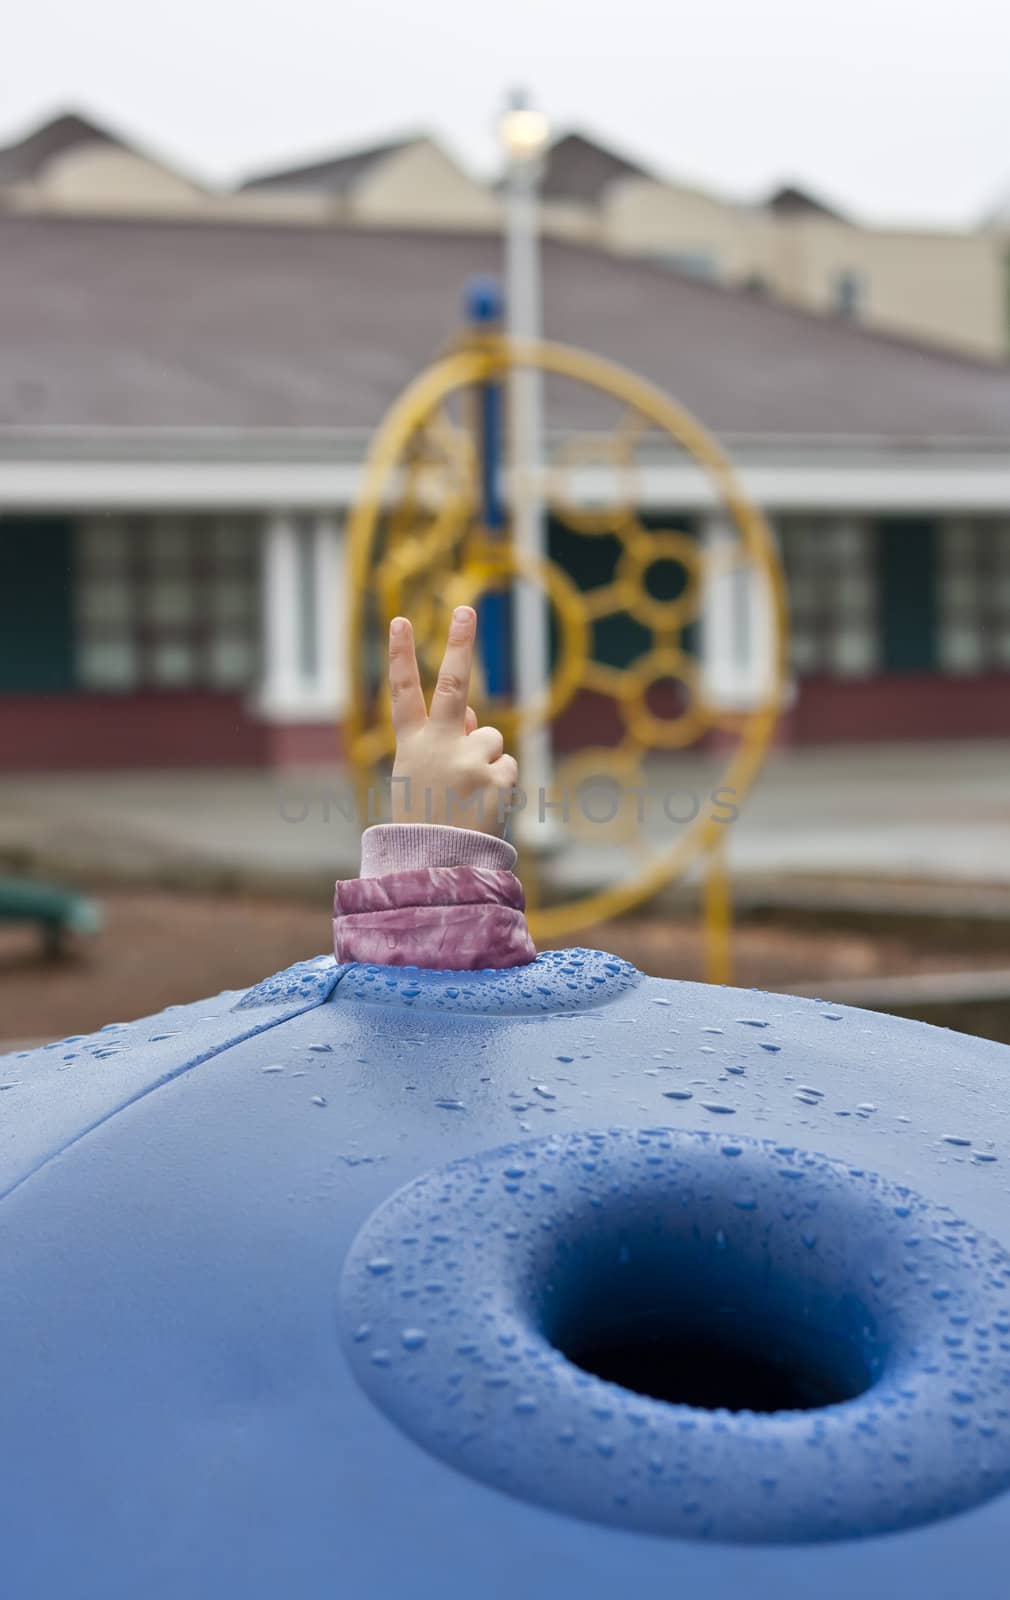 Child show gesture on playground at rainy day.